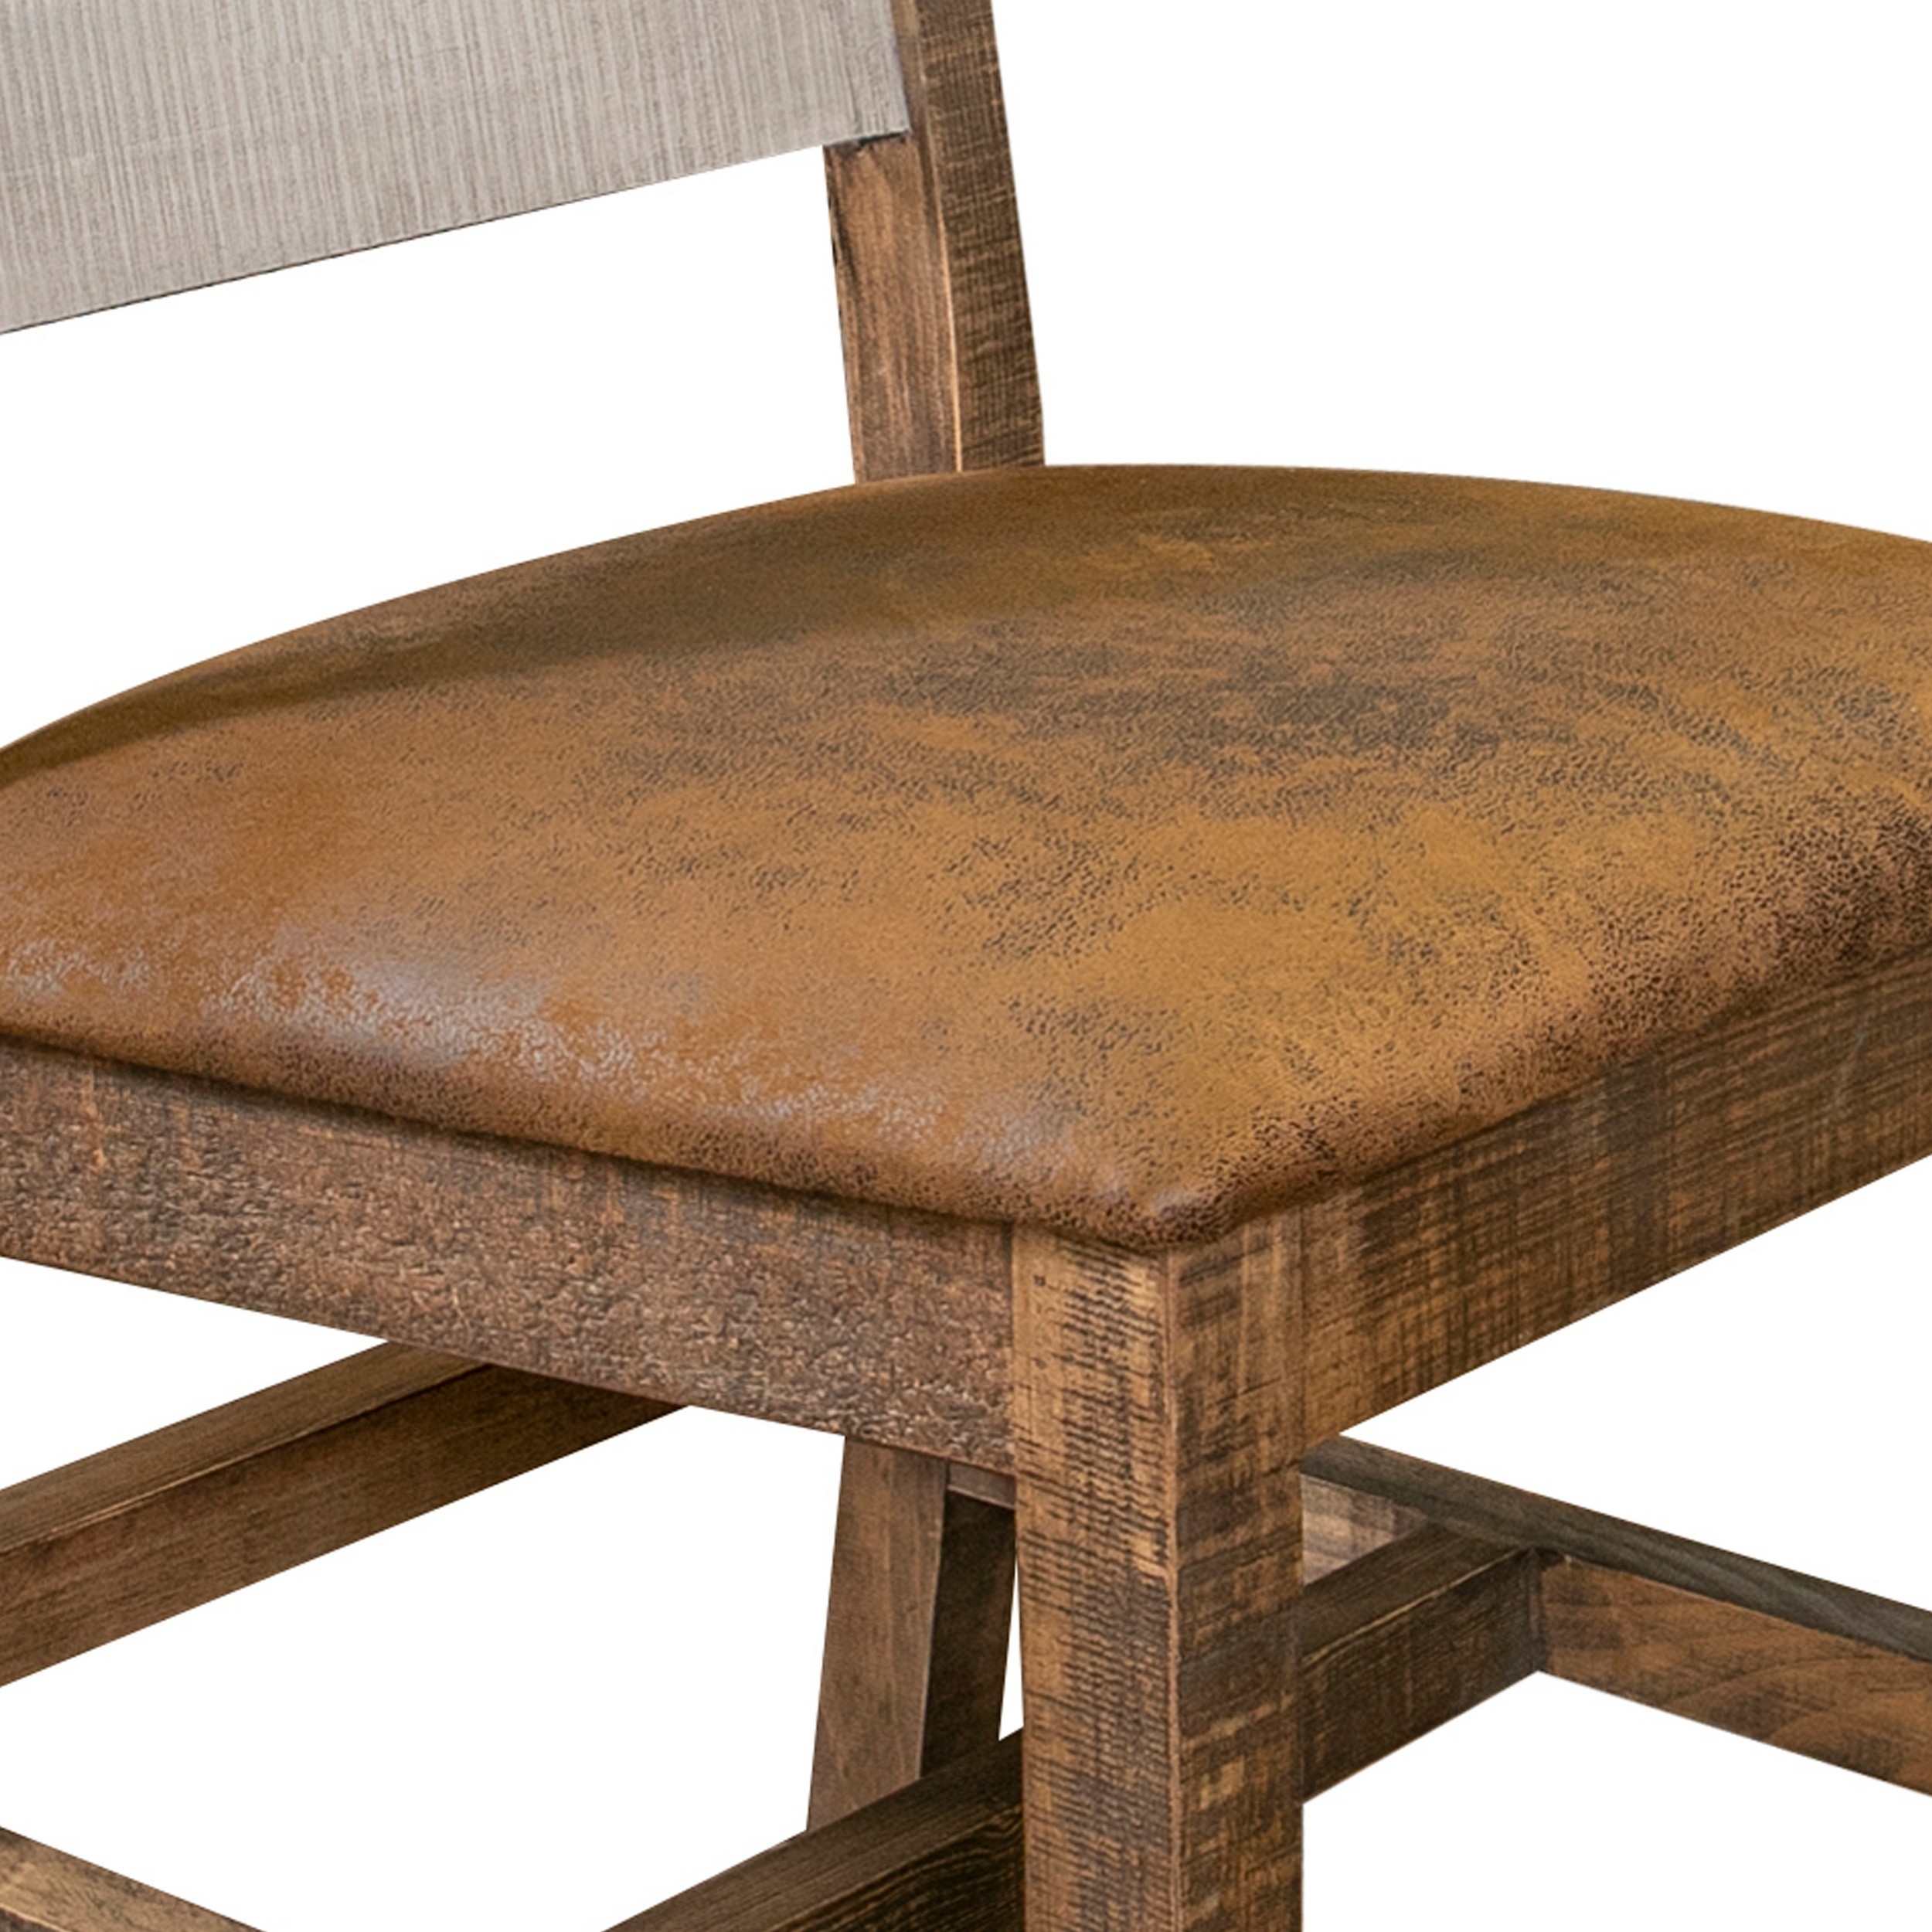 Pino 22 Inch Dining Chair, Set Of 2, Pine Wood, Microfiber Seat, Panel Back- Saltoro Sherpi